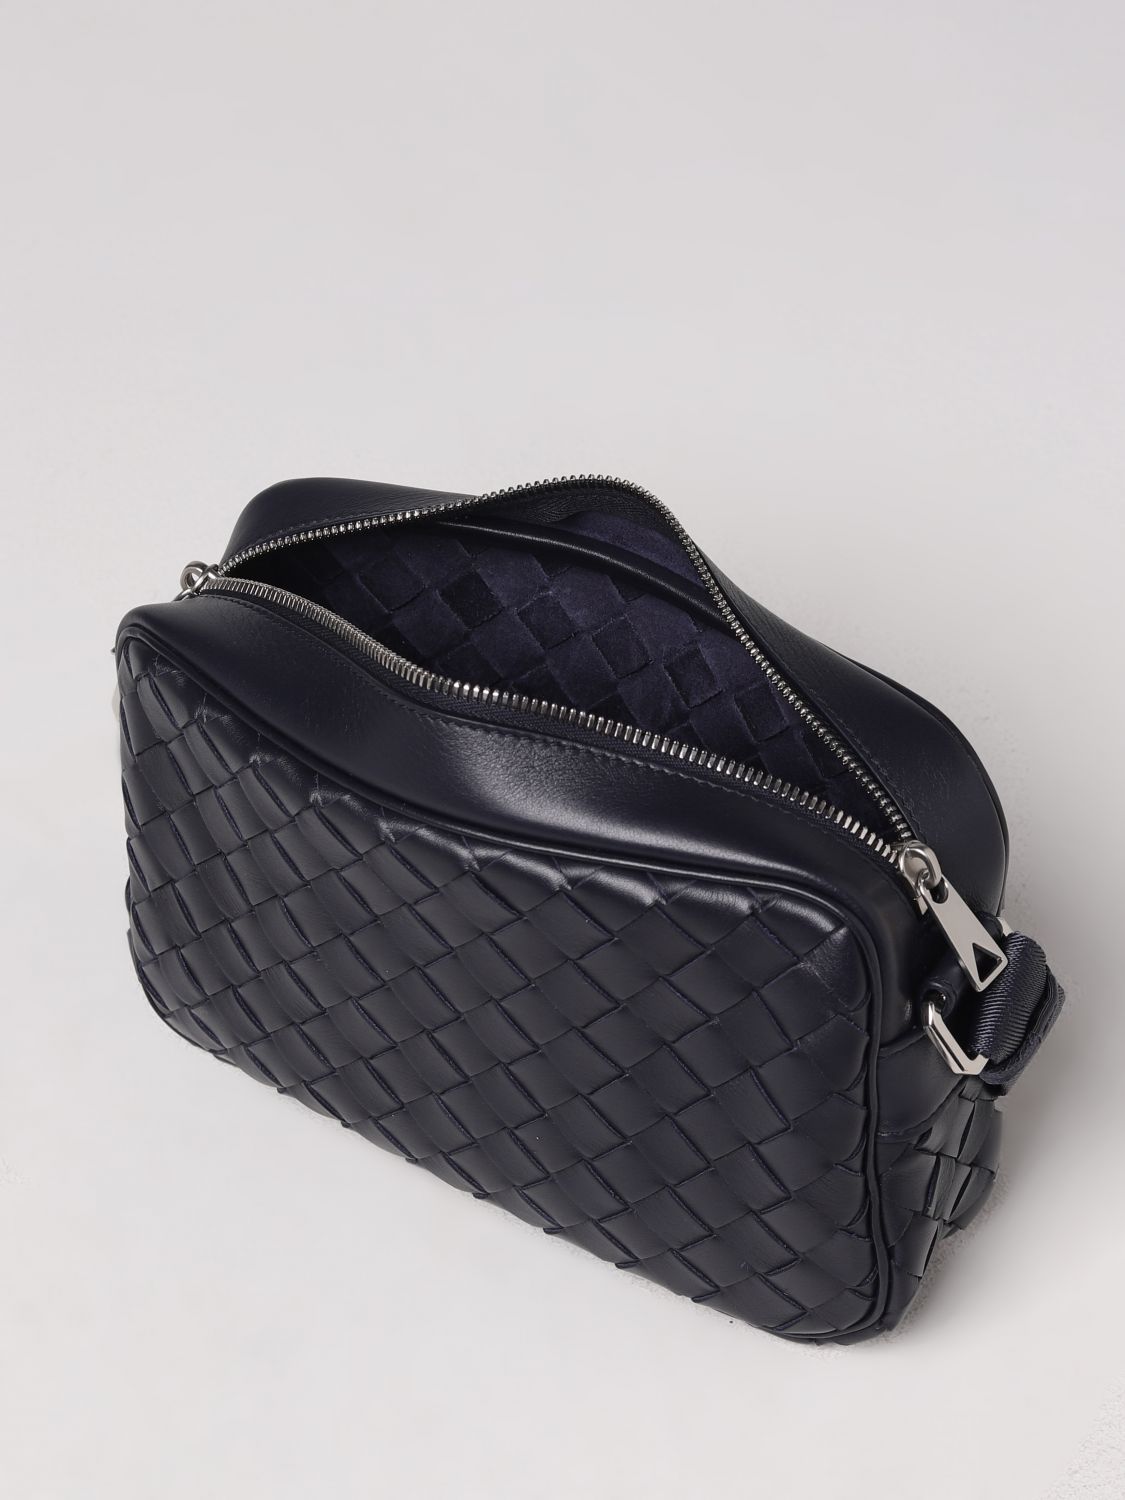 BOTTEGA VENETA: bag in woven leather - Silver | Bottega Veneta shoulder ...